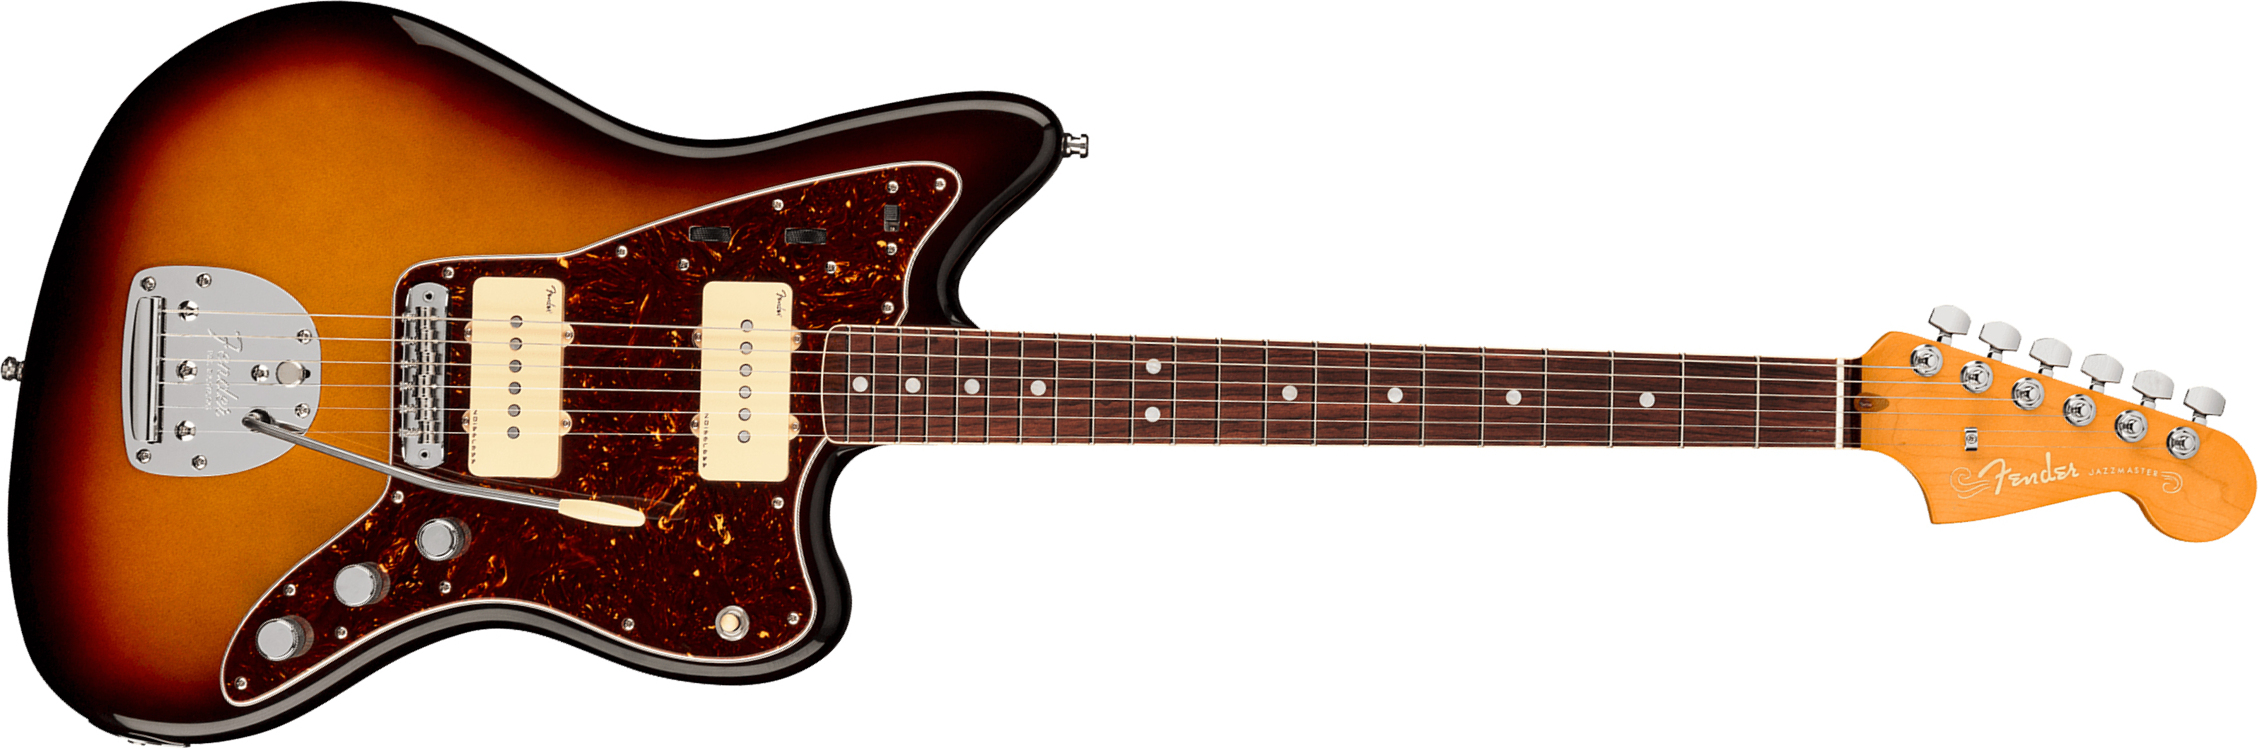 Fender Jazzmaster American Ultra 2019 Usa Rw - Ultraburst - Retro rock electric guitar - Main picture